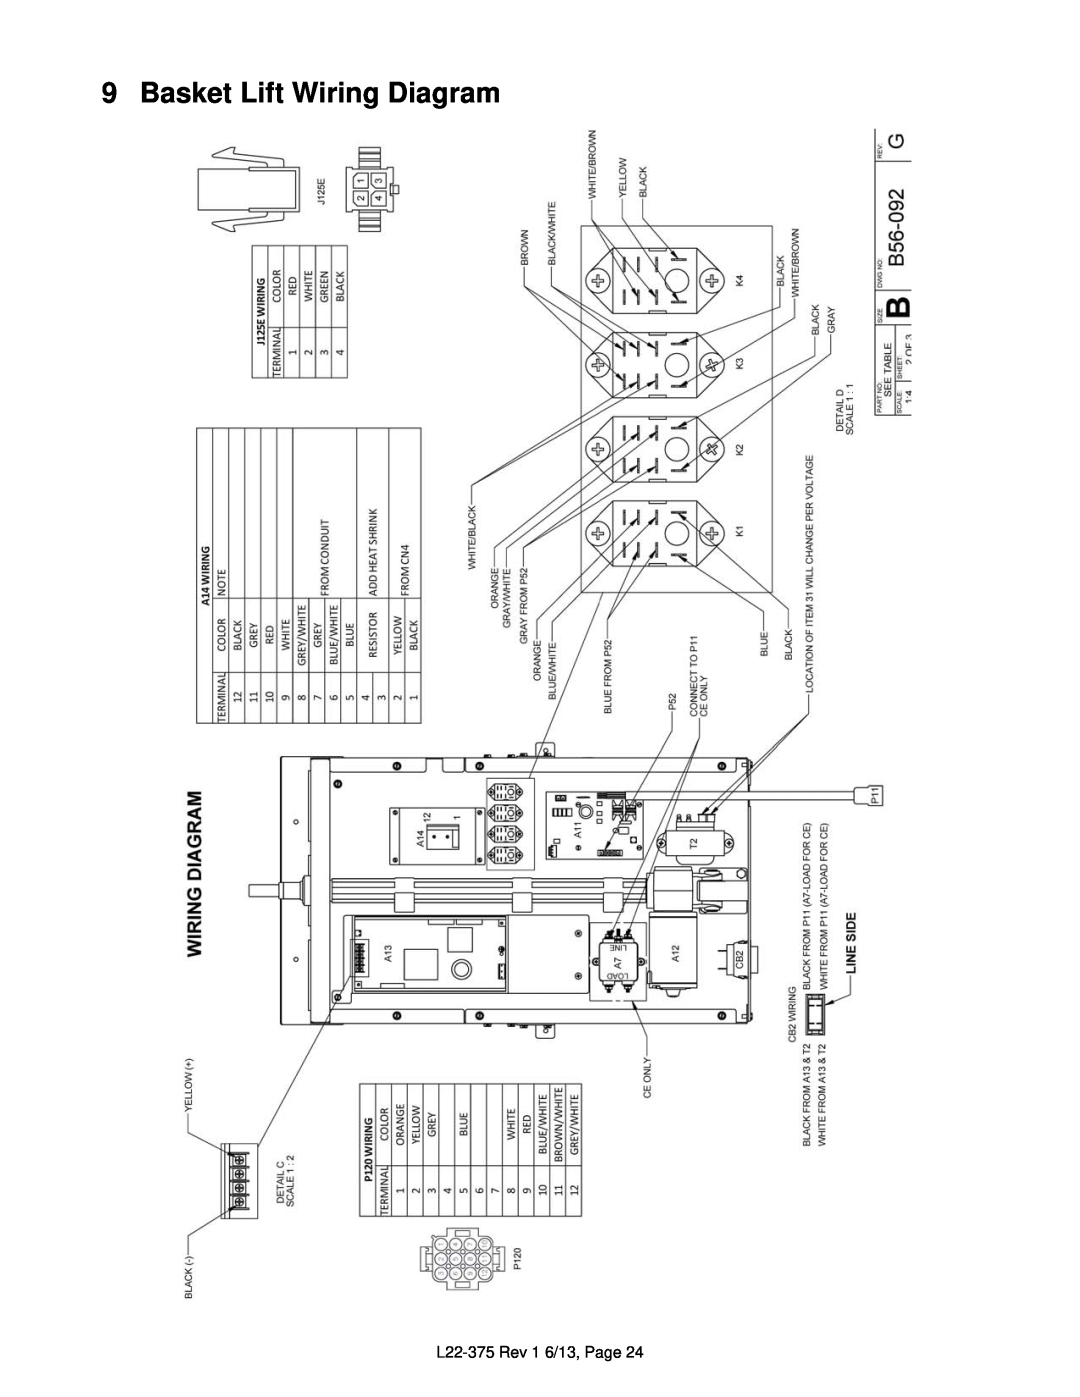 Pitco Frialator manual Basket Lift Wiring Diagram, L22-375 Rev 1 6/13, Page 